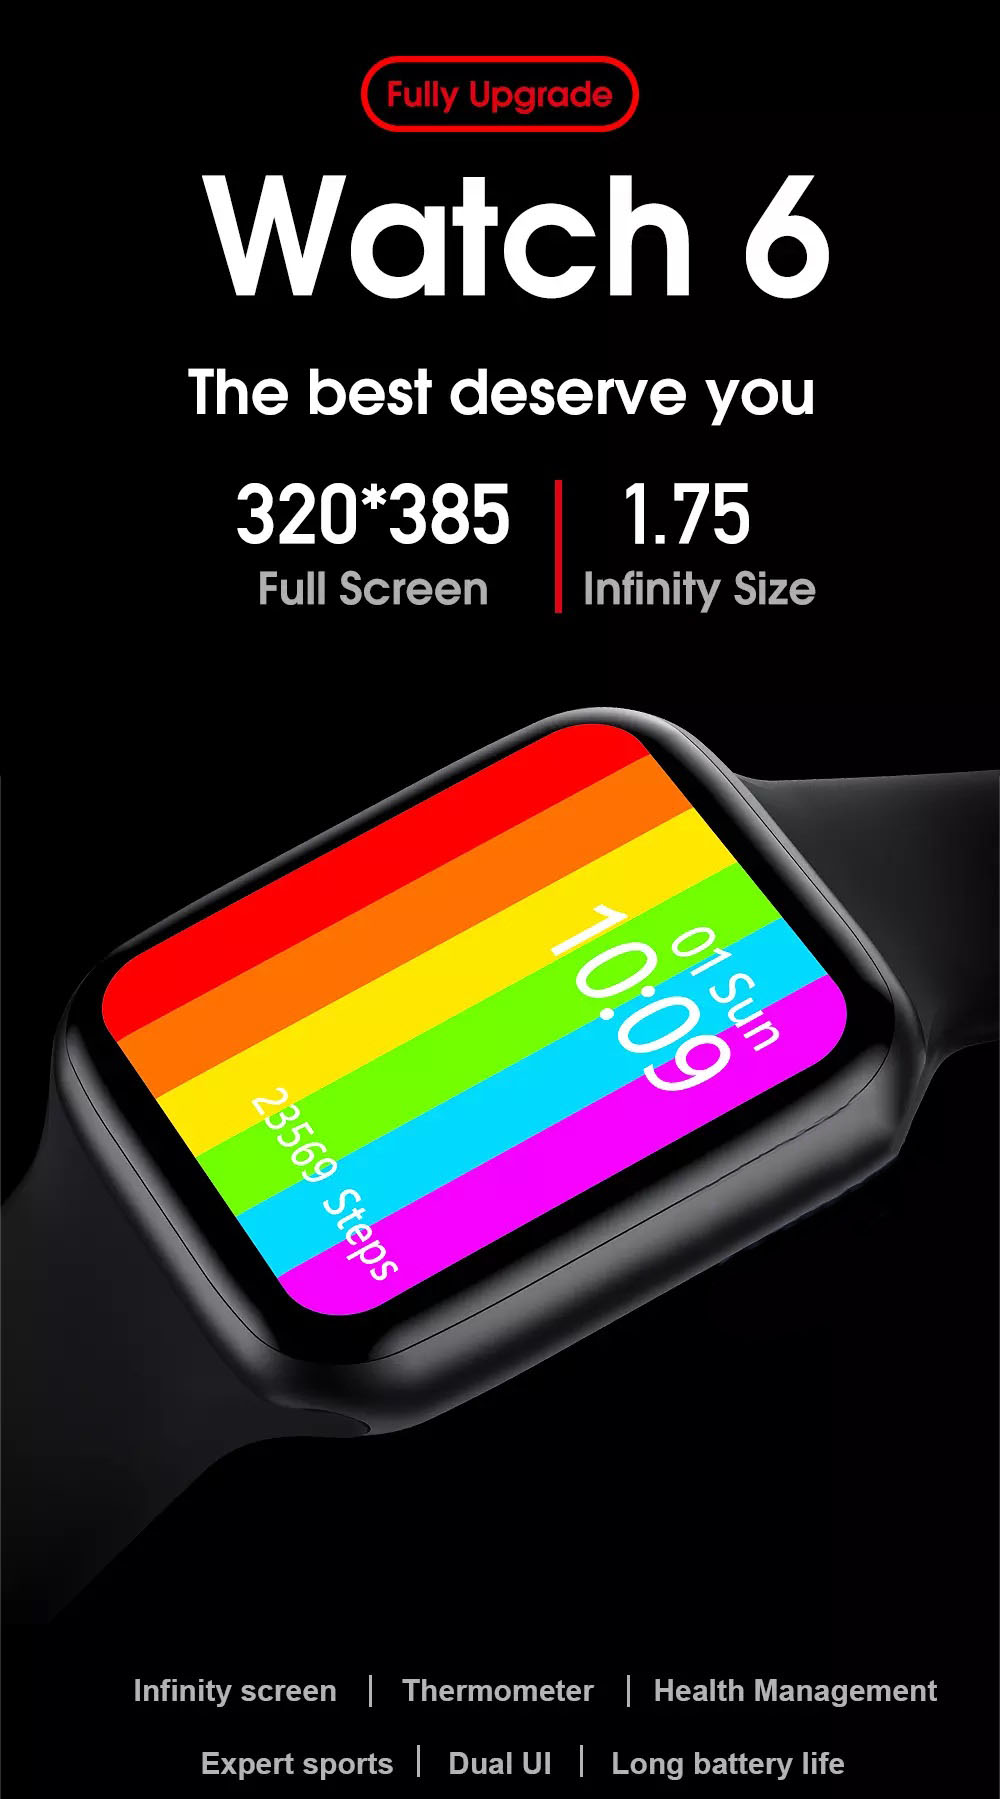 Original Microware W26+ Plus Smart Watch with Calling Feature IP68 Waterproof Fitness Tracker Sports Watch-black